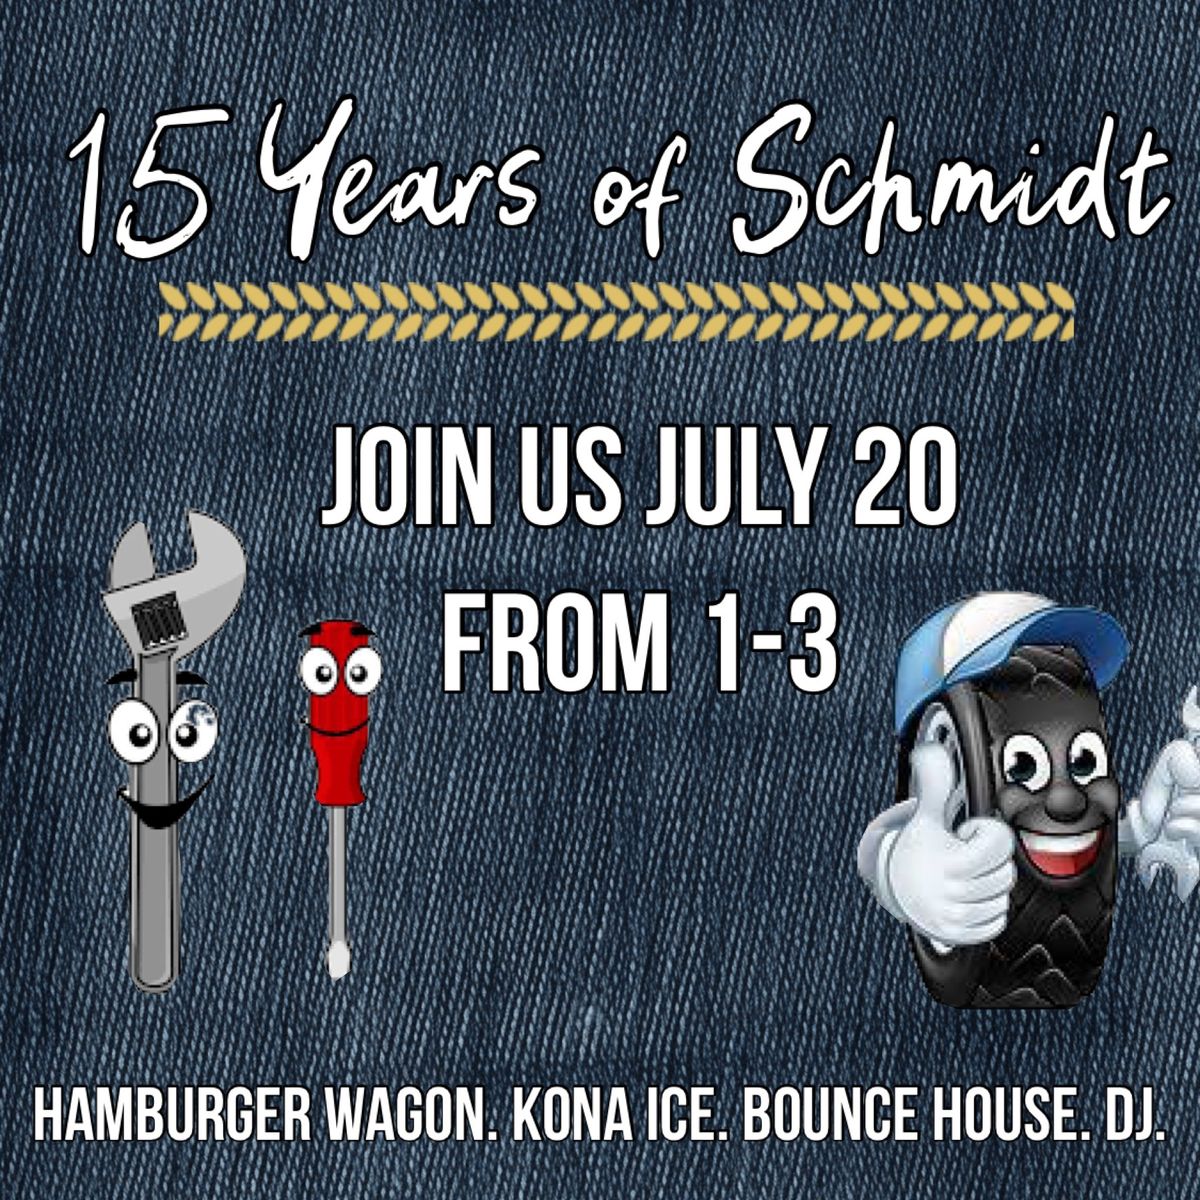 15 Years of Knowing Schmidt 